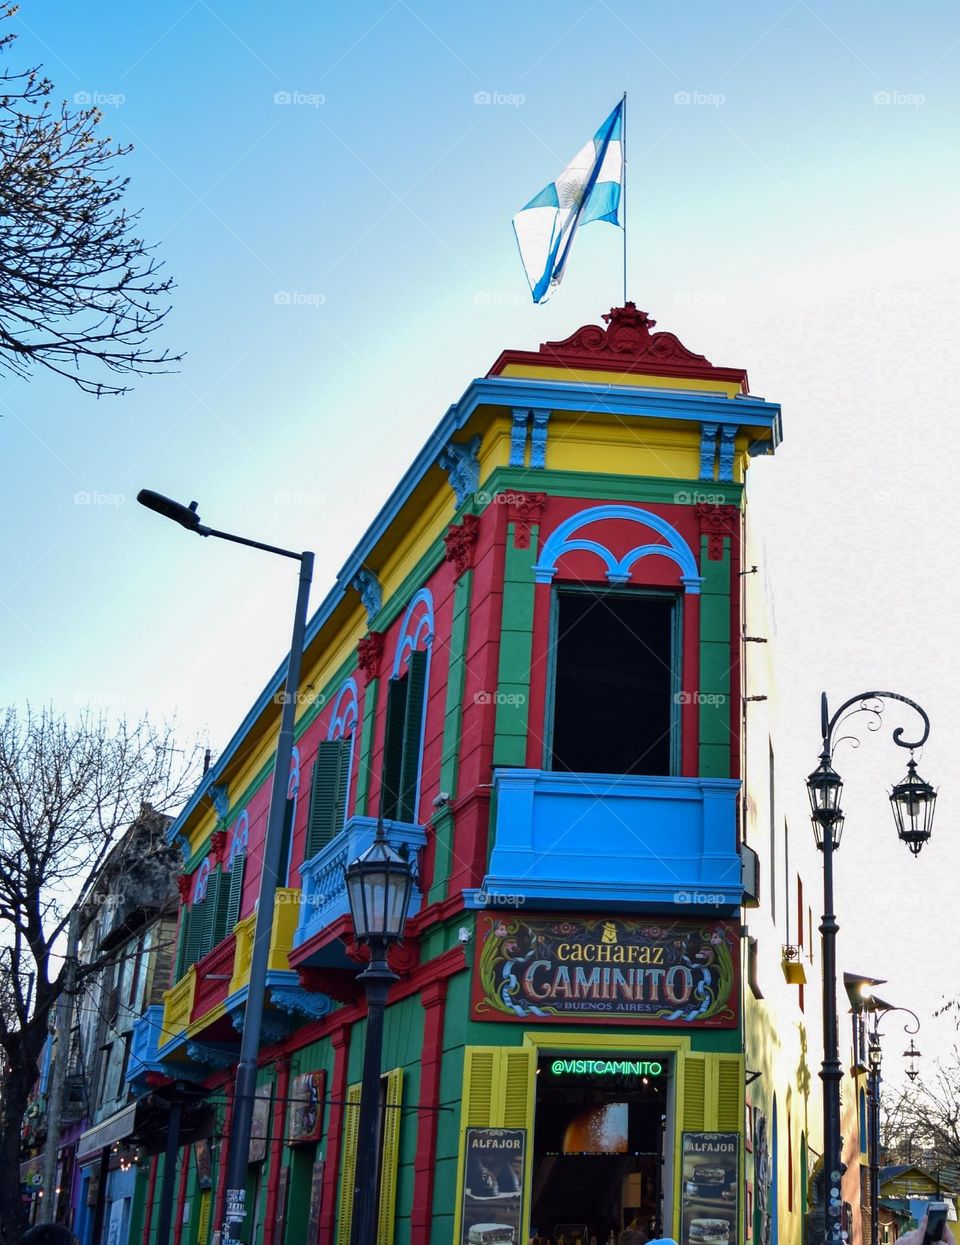 Carminito Buenos Aires Argentina